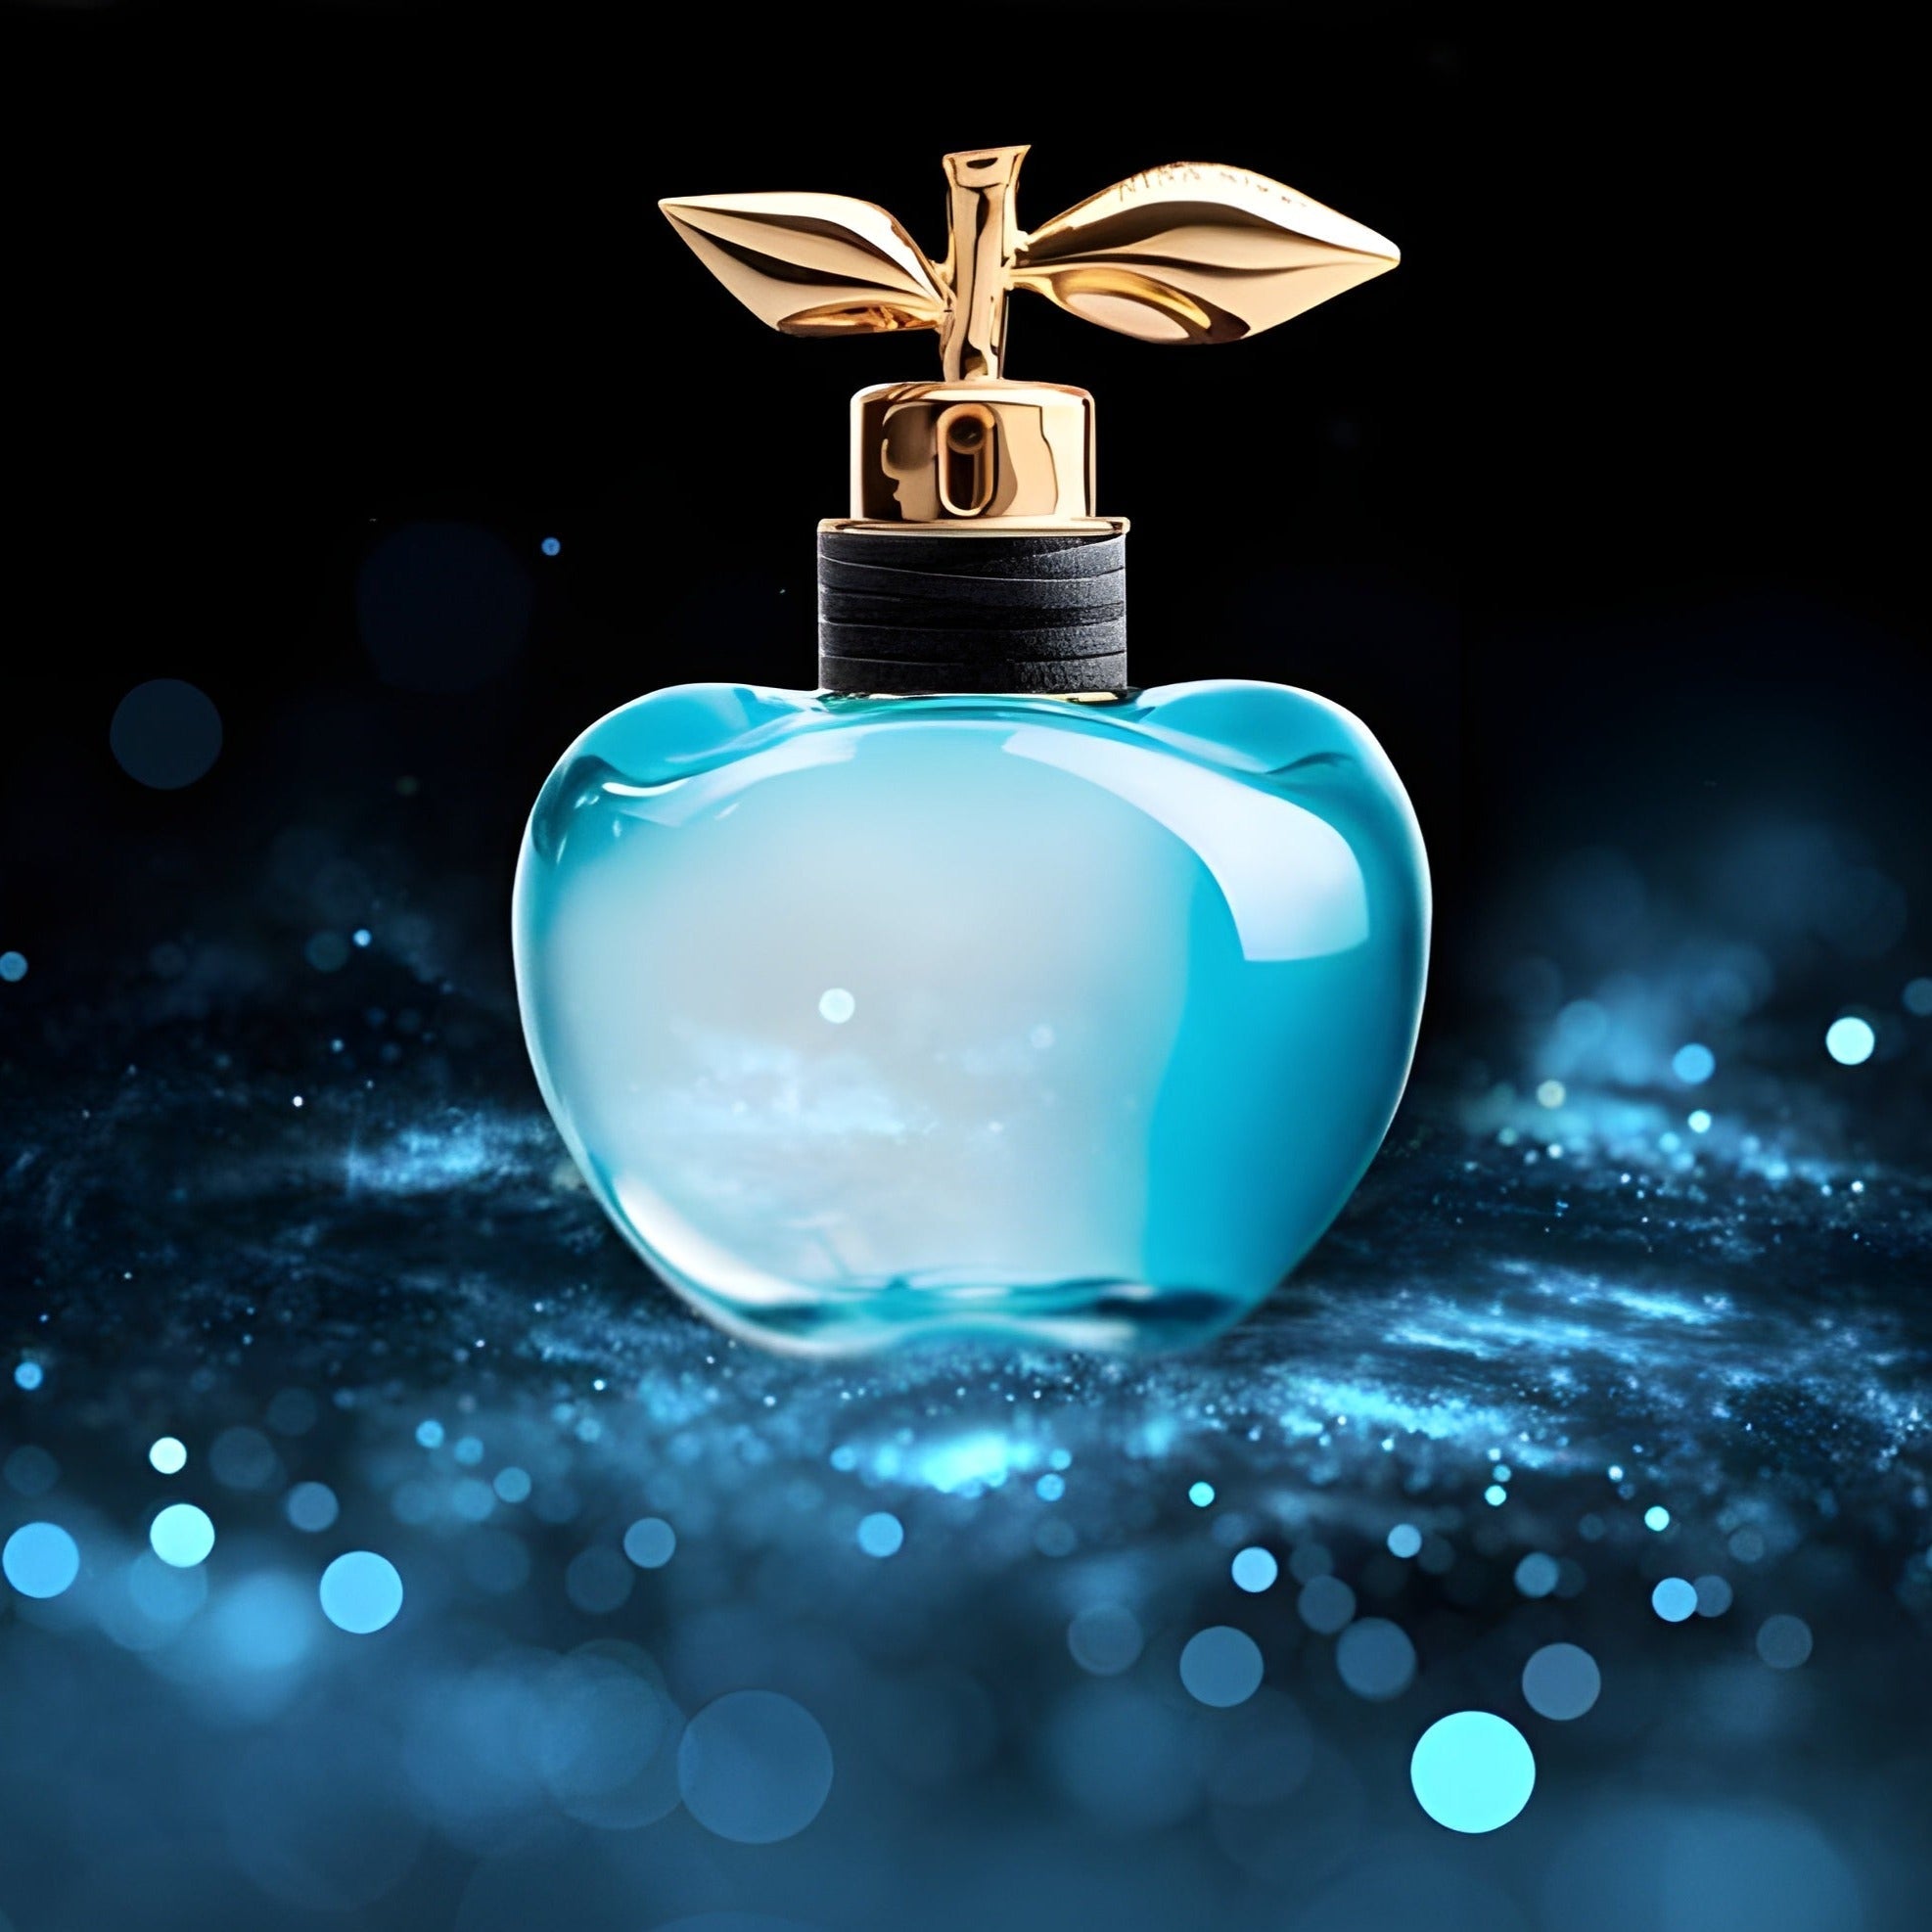 Nina Ricci Luna EDT | My Perfume Shop